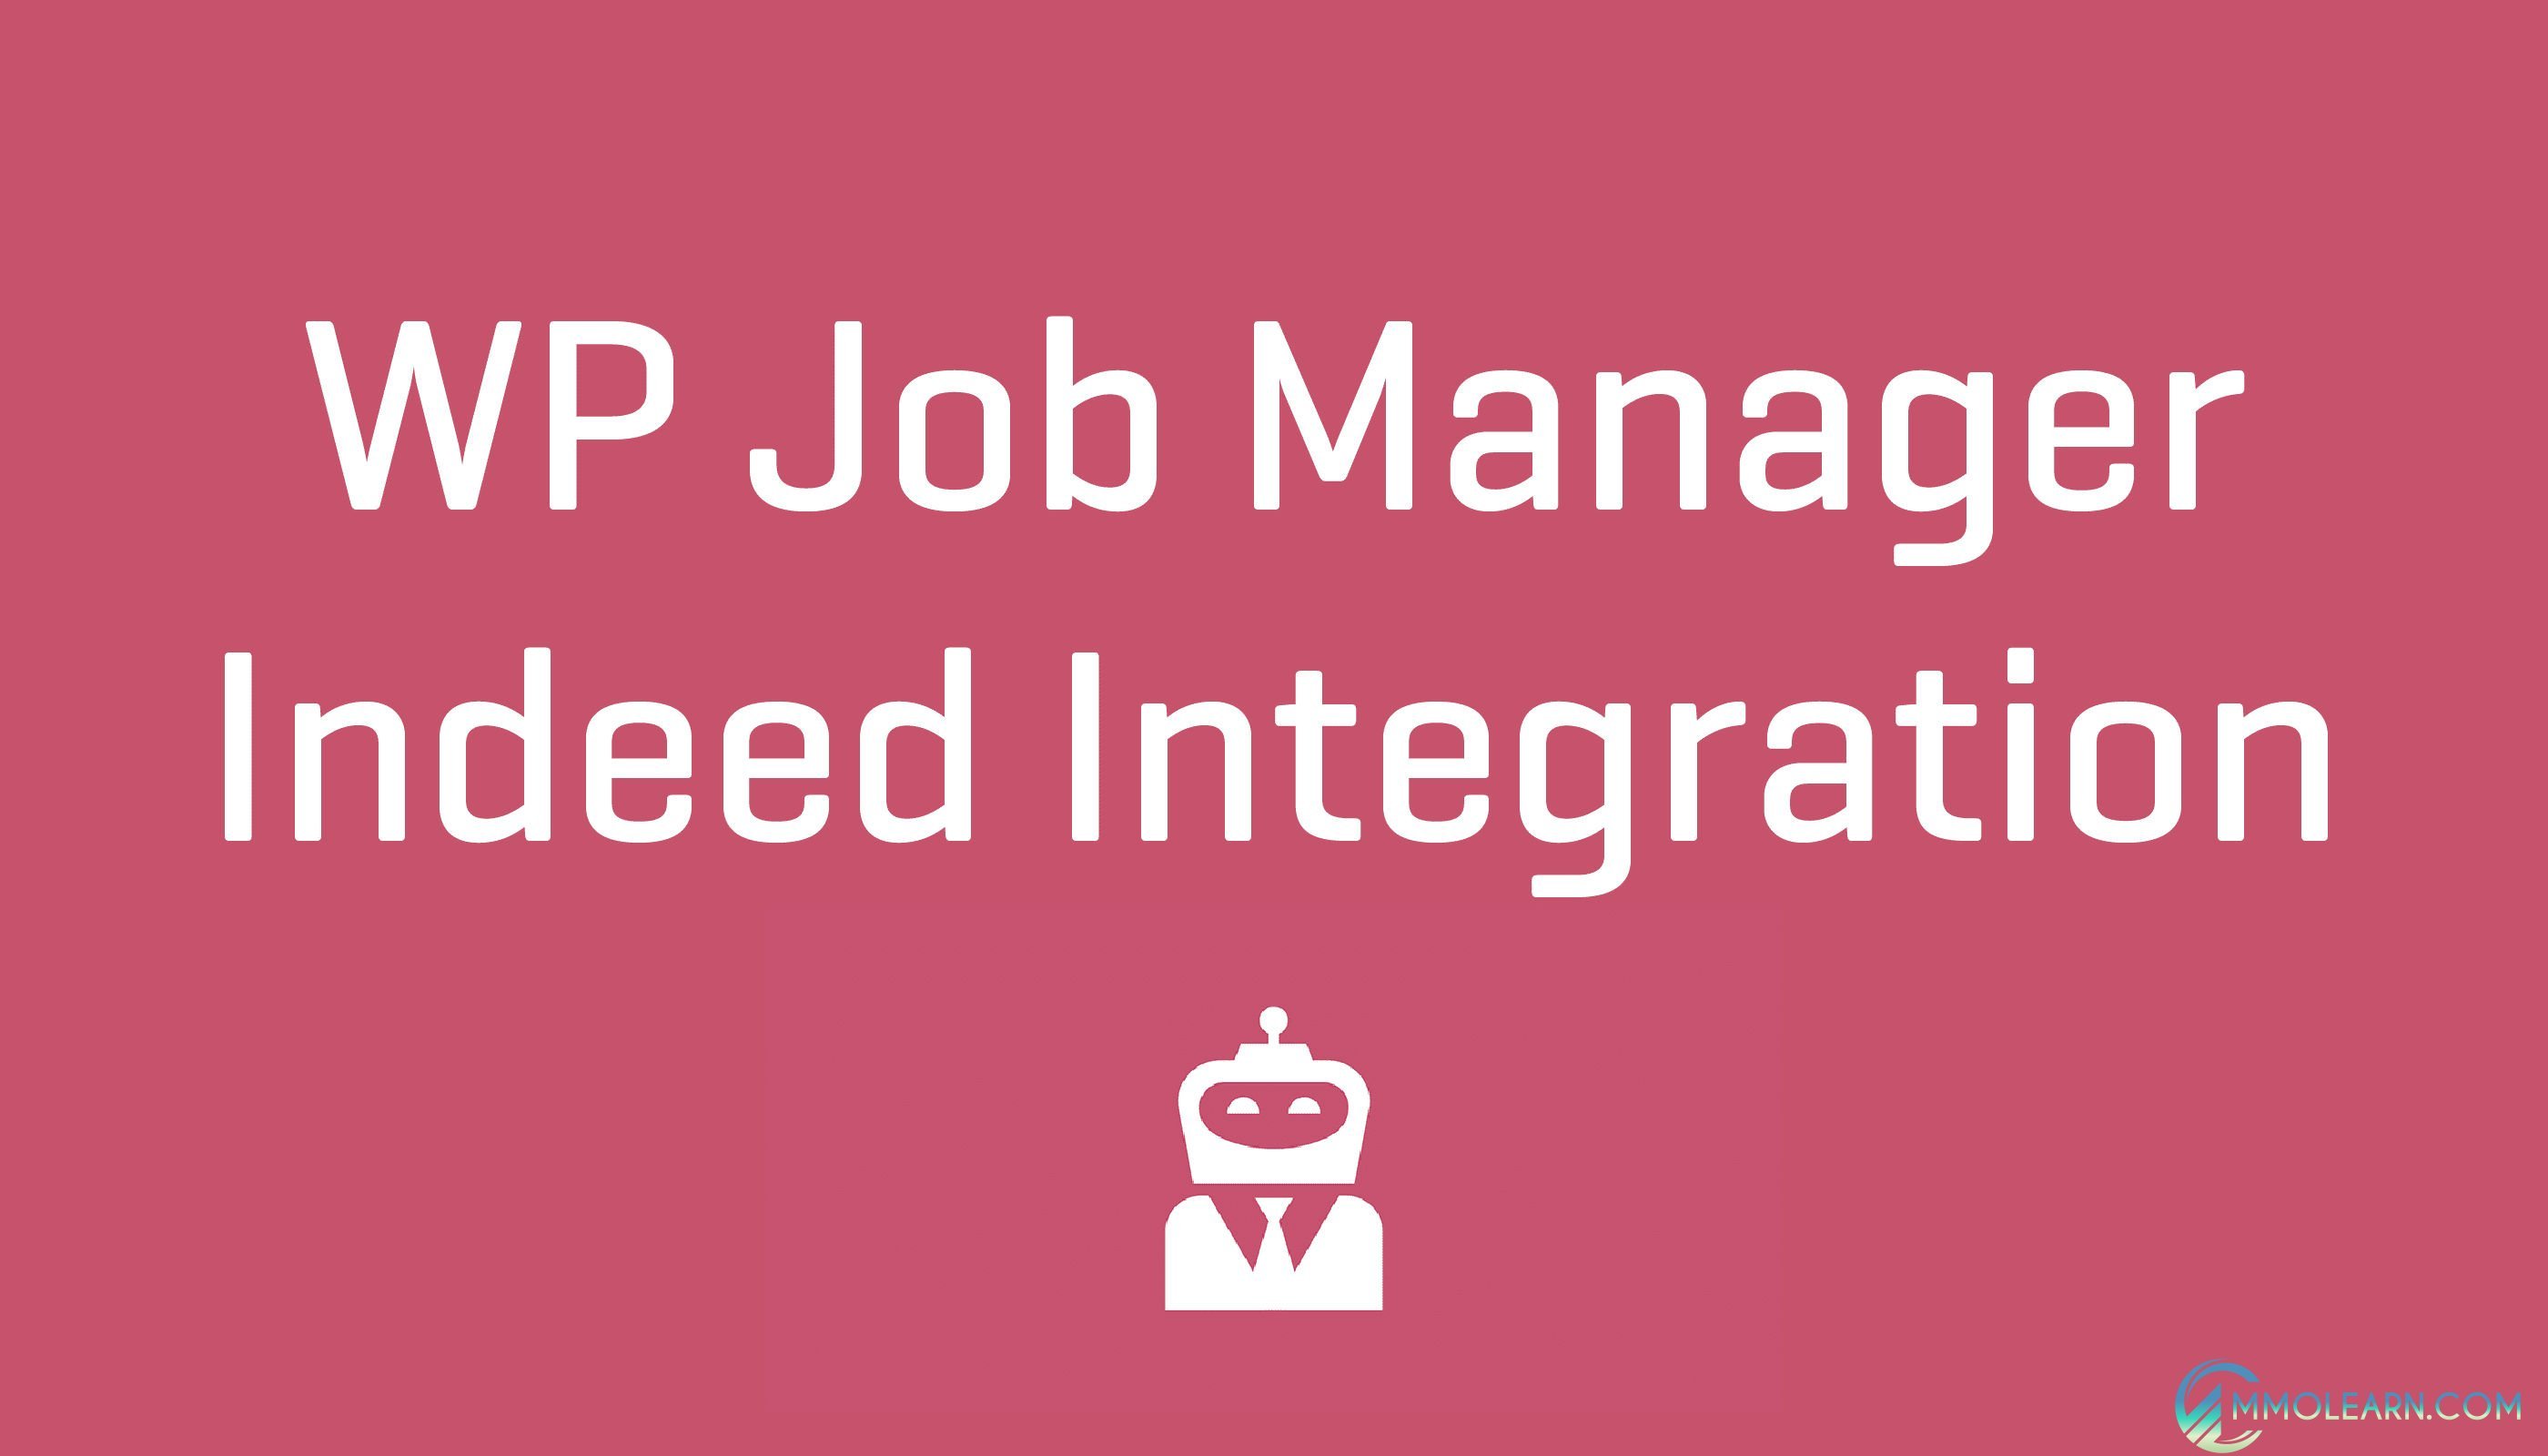 WP Job Manager - Indeed Integration.jpg